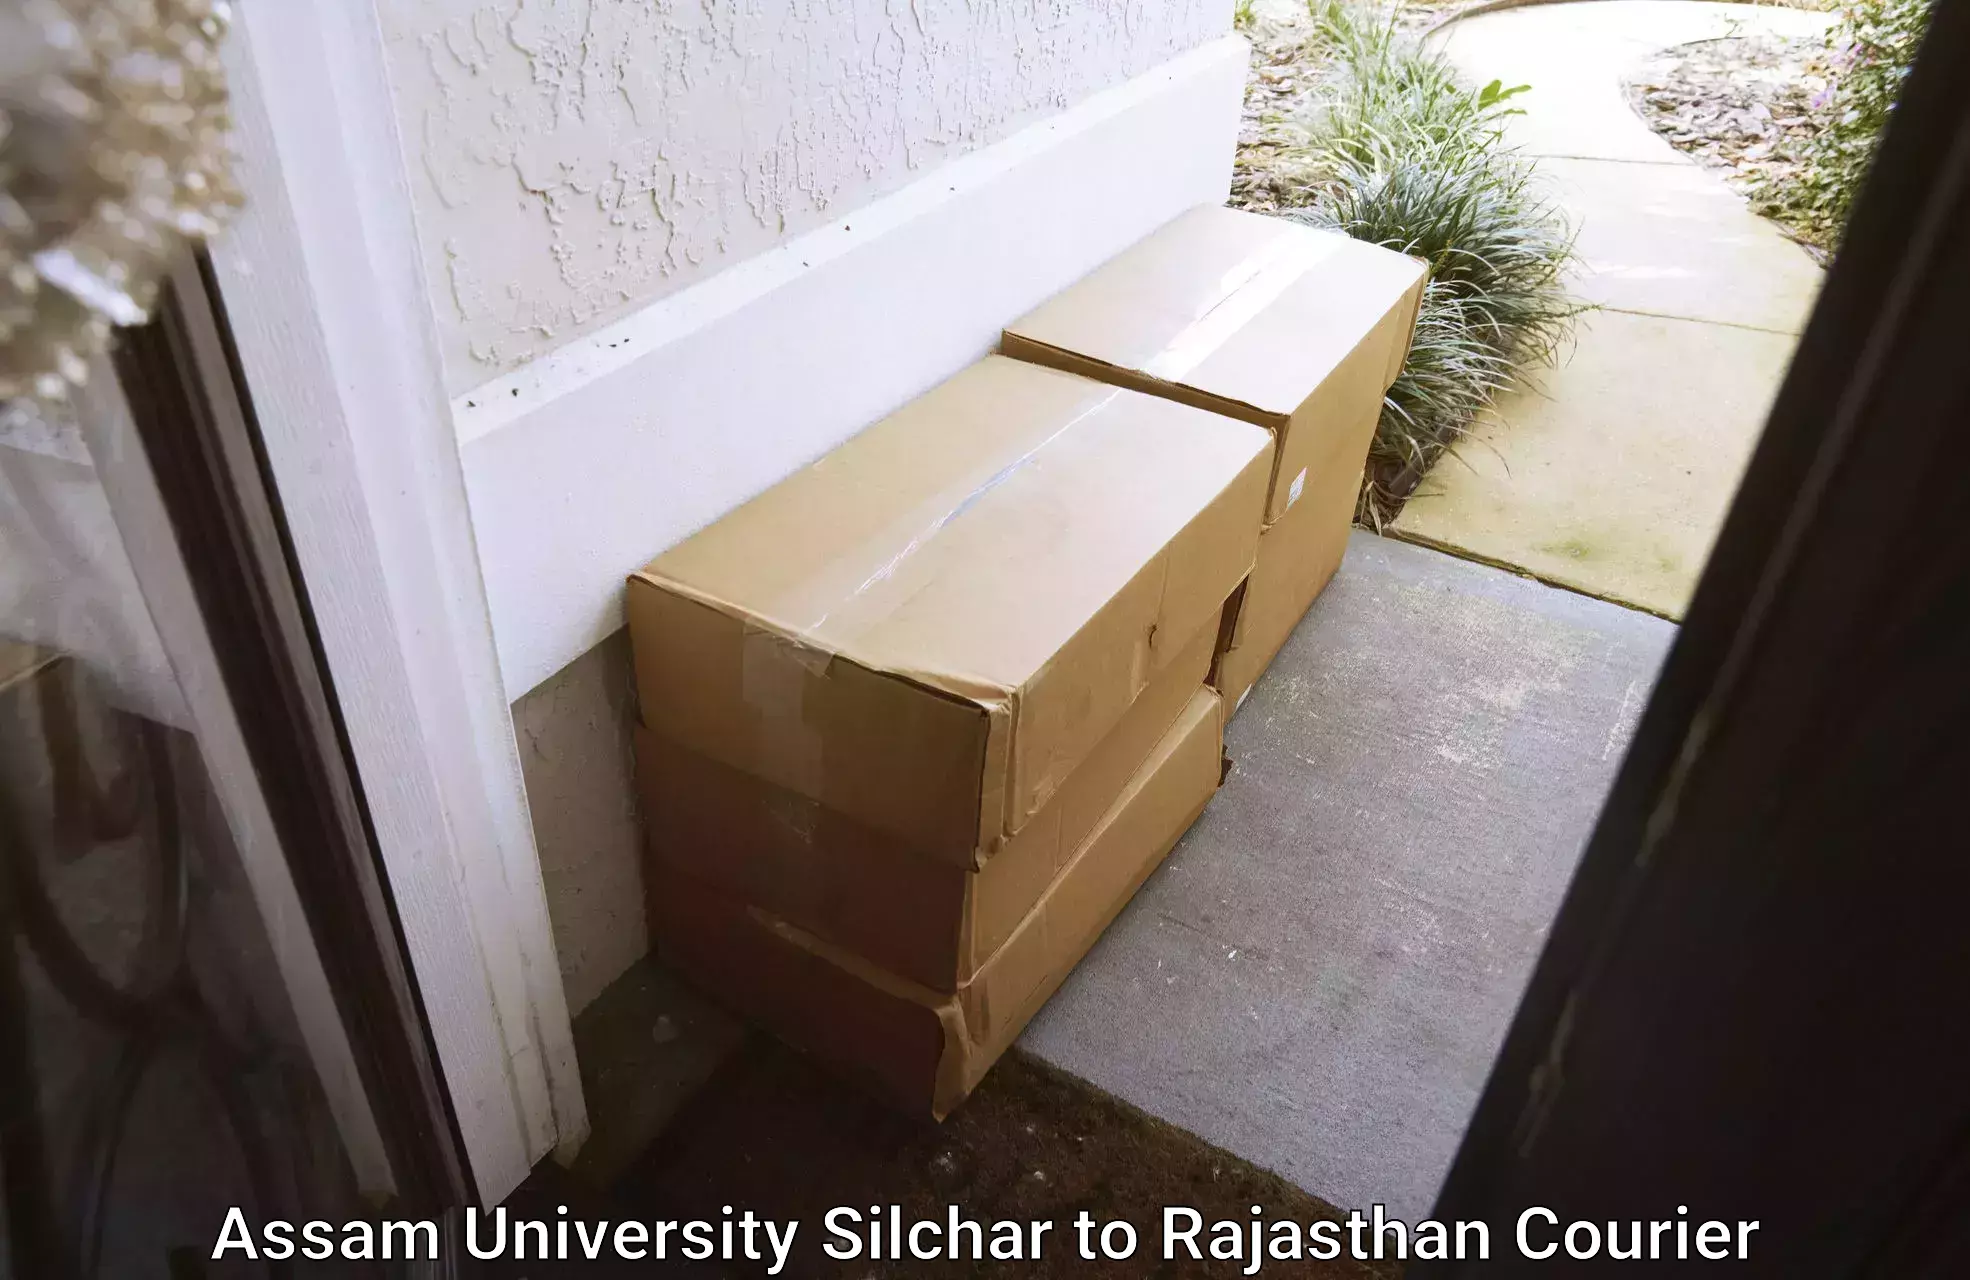 International parcel service Assam University Silchar to Rajasthan